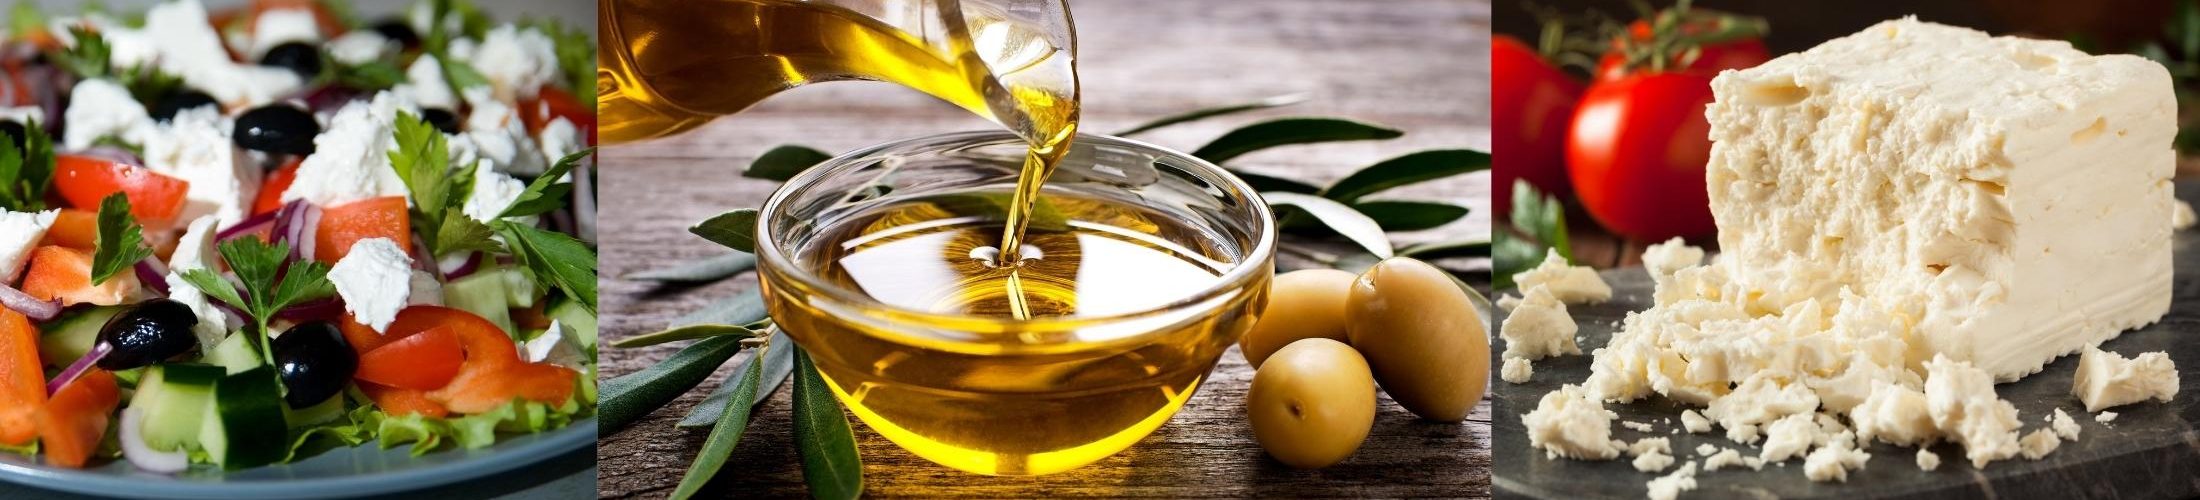 Olives, Olive Oil, and Feta at Euro Fine Foods